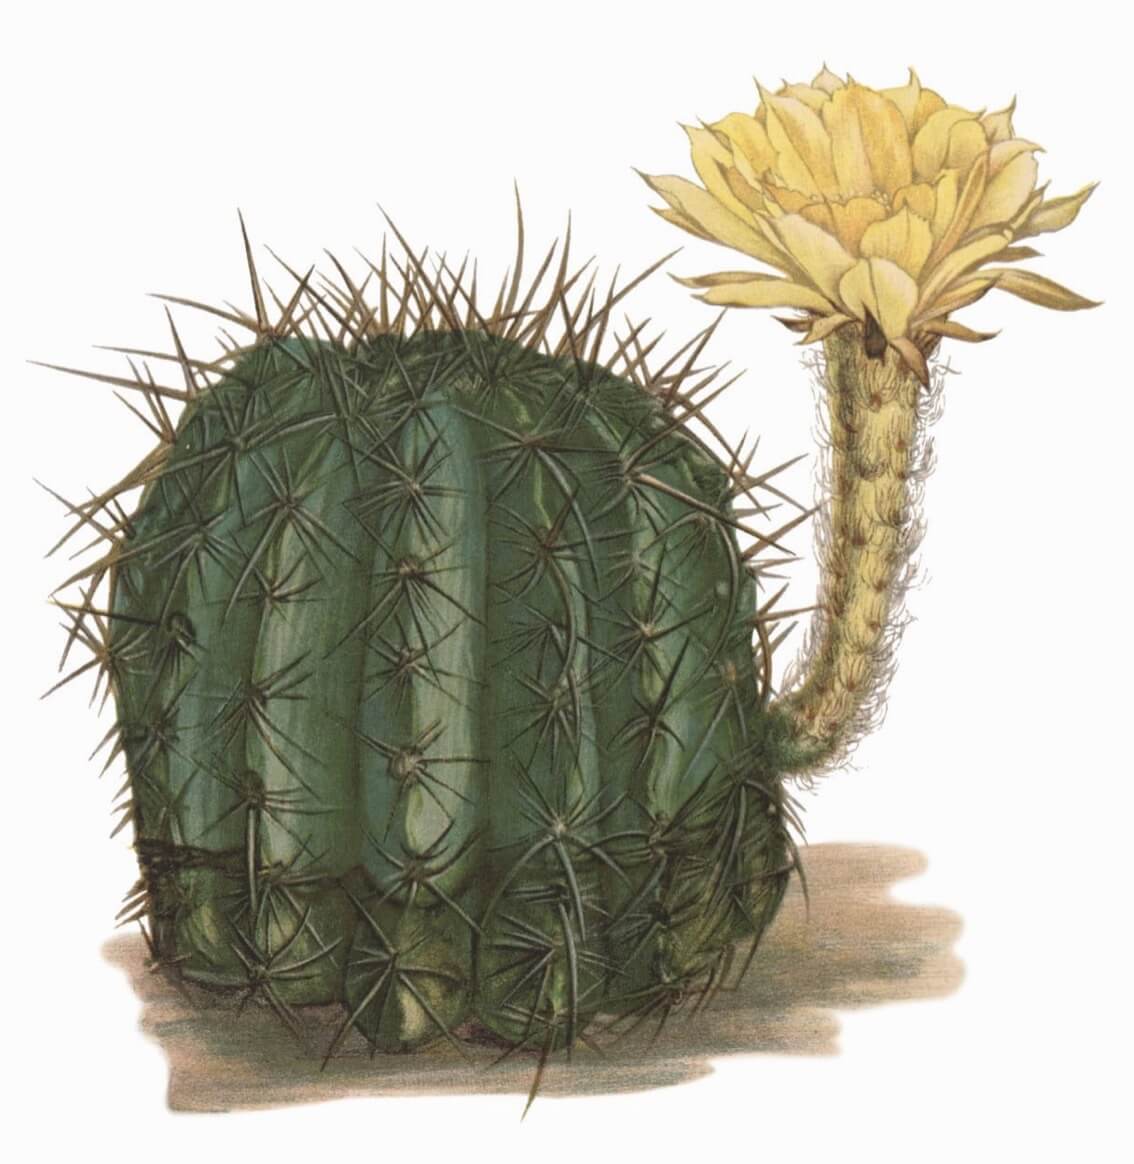 Hedgehog cactus Echinopsis aurea aka sea-urchin cactus, Easter lily cactus